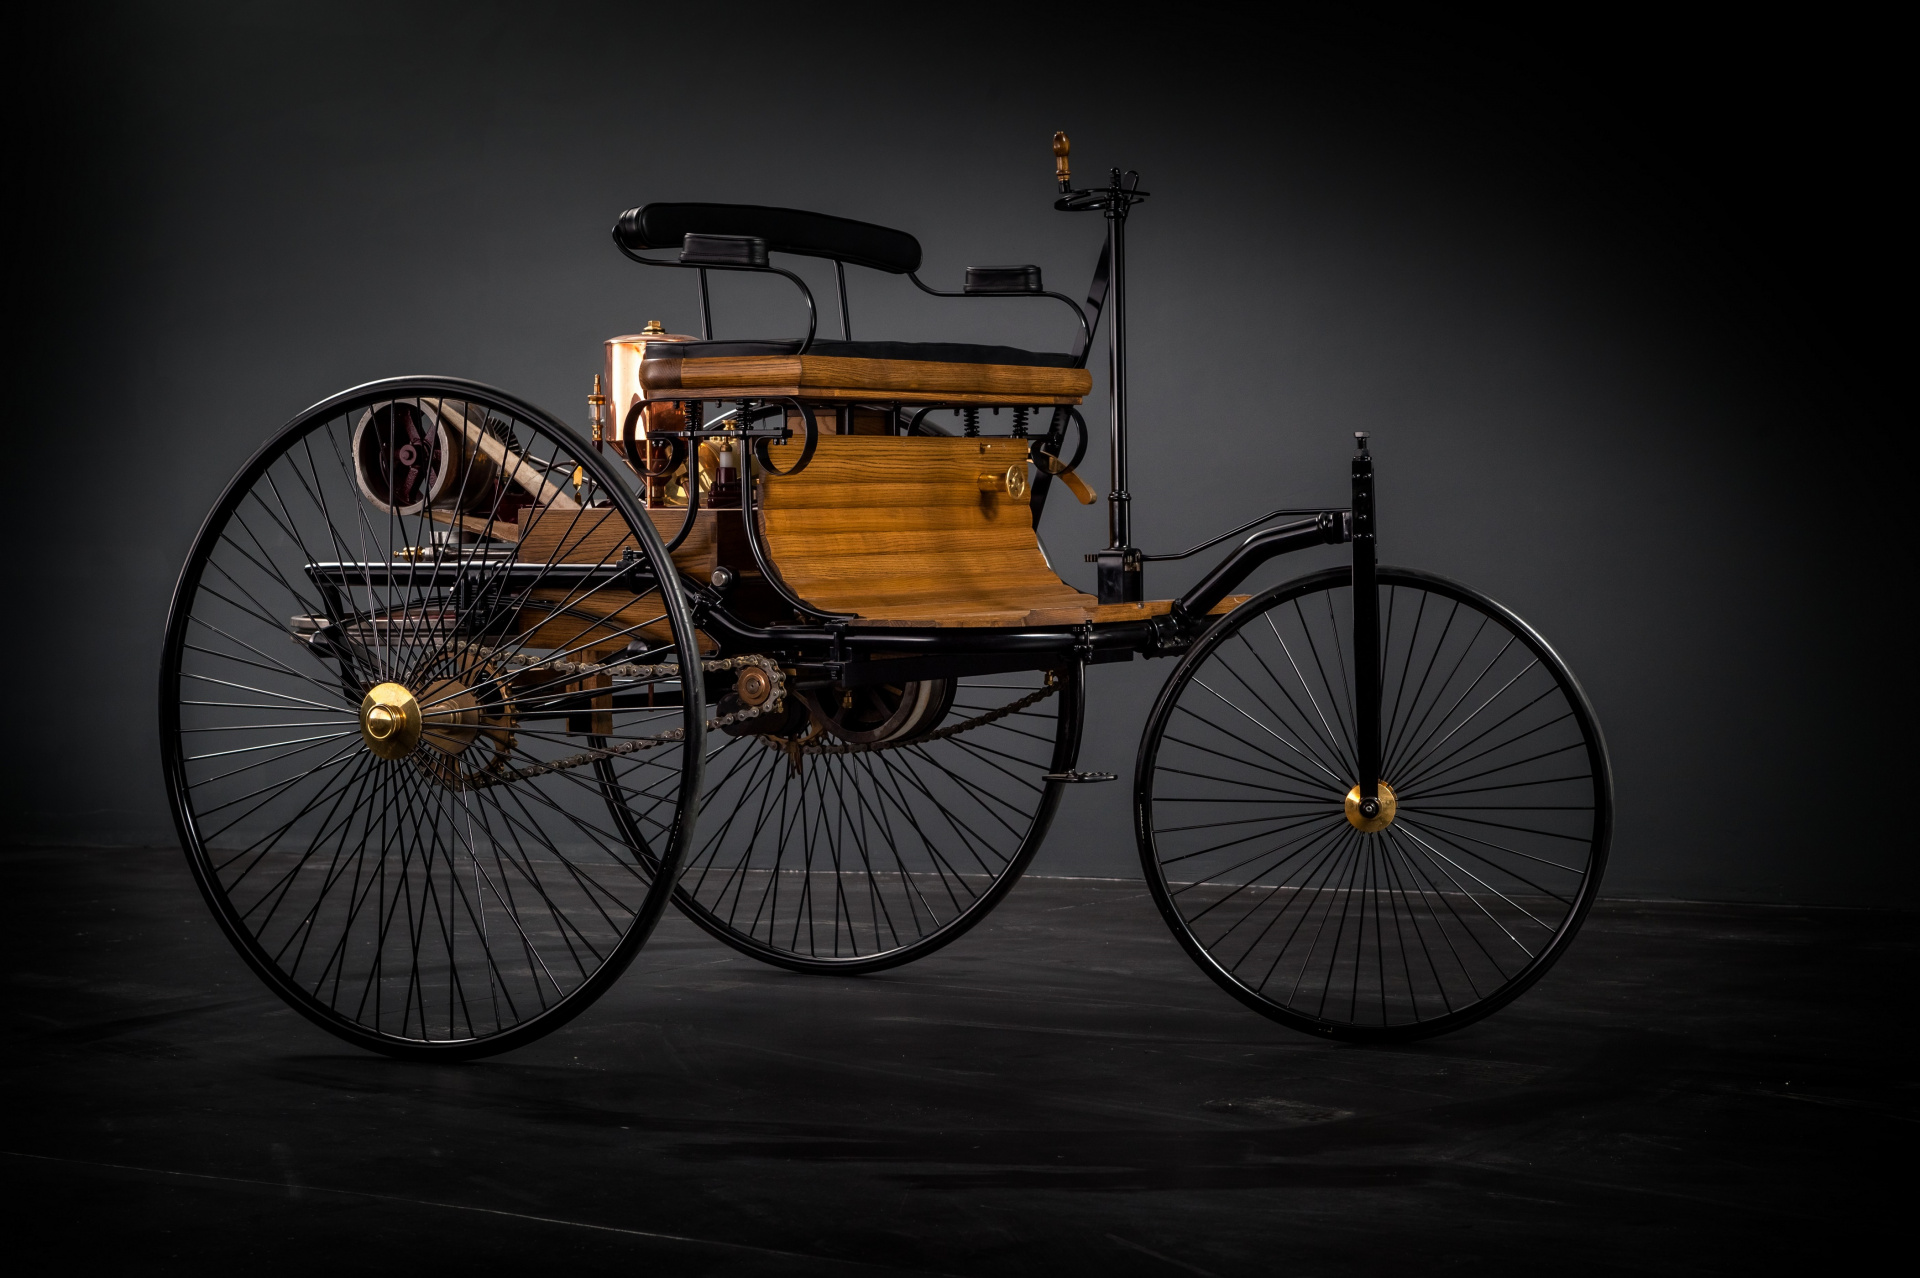 Автомобили конца XIX – начала XX века